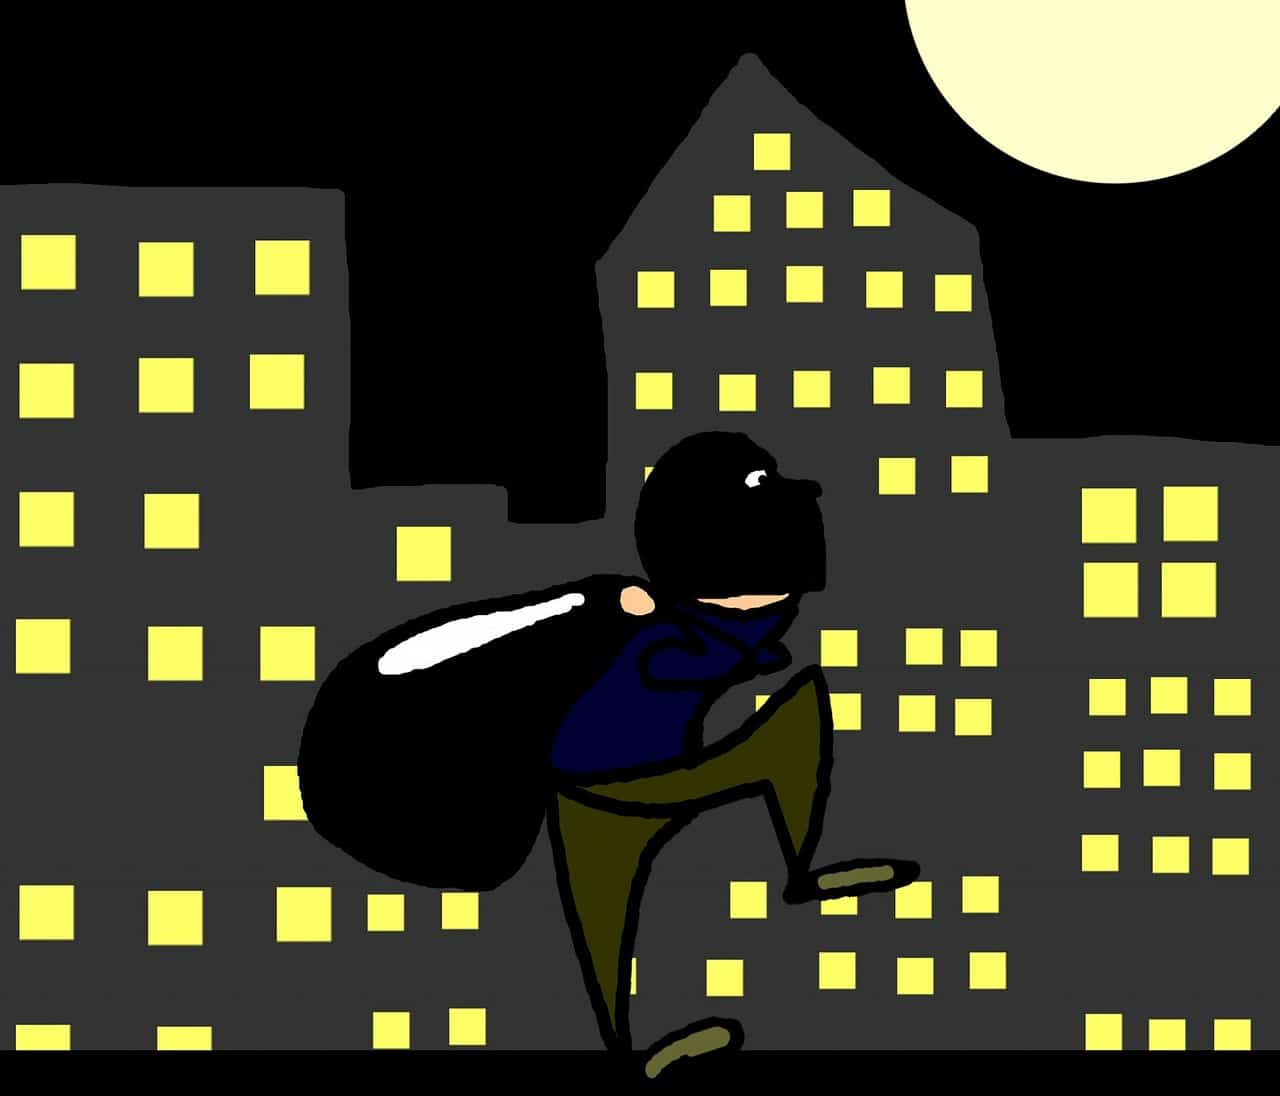 Funny cartoon of a burglar with a bag running through city at night.